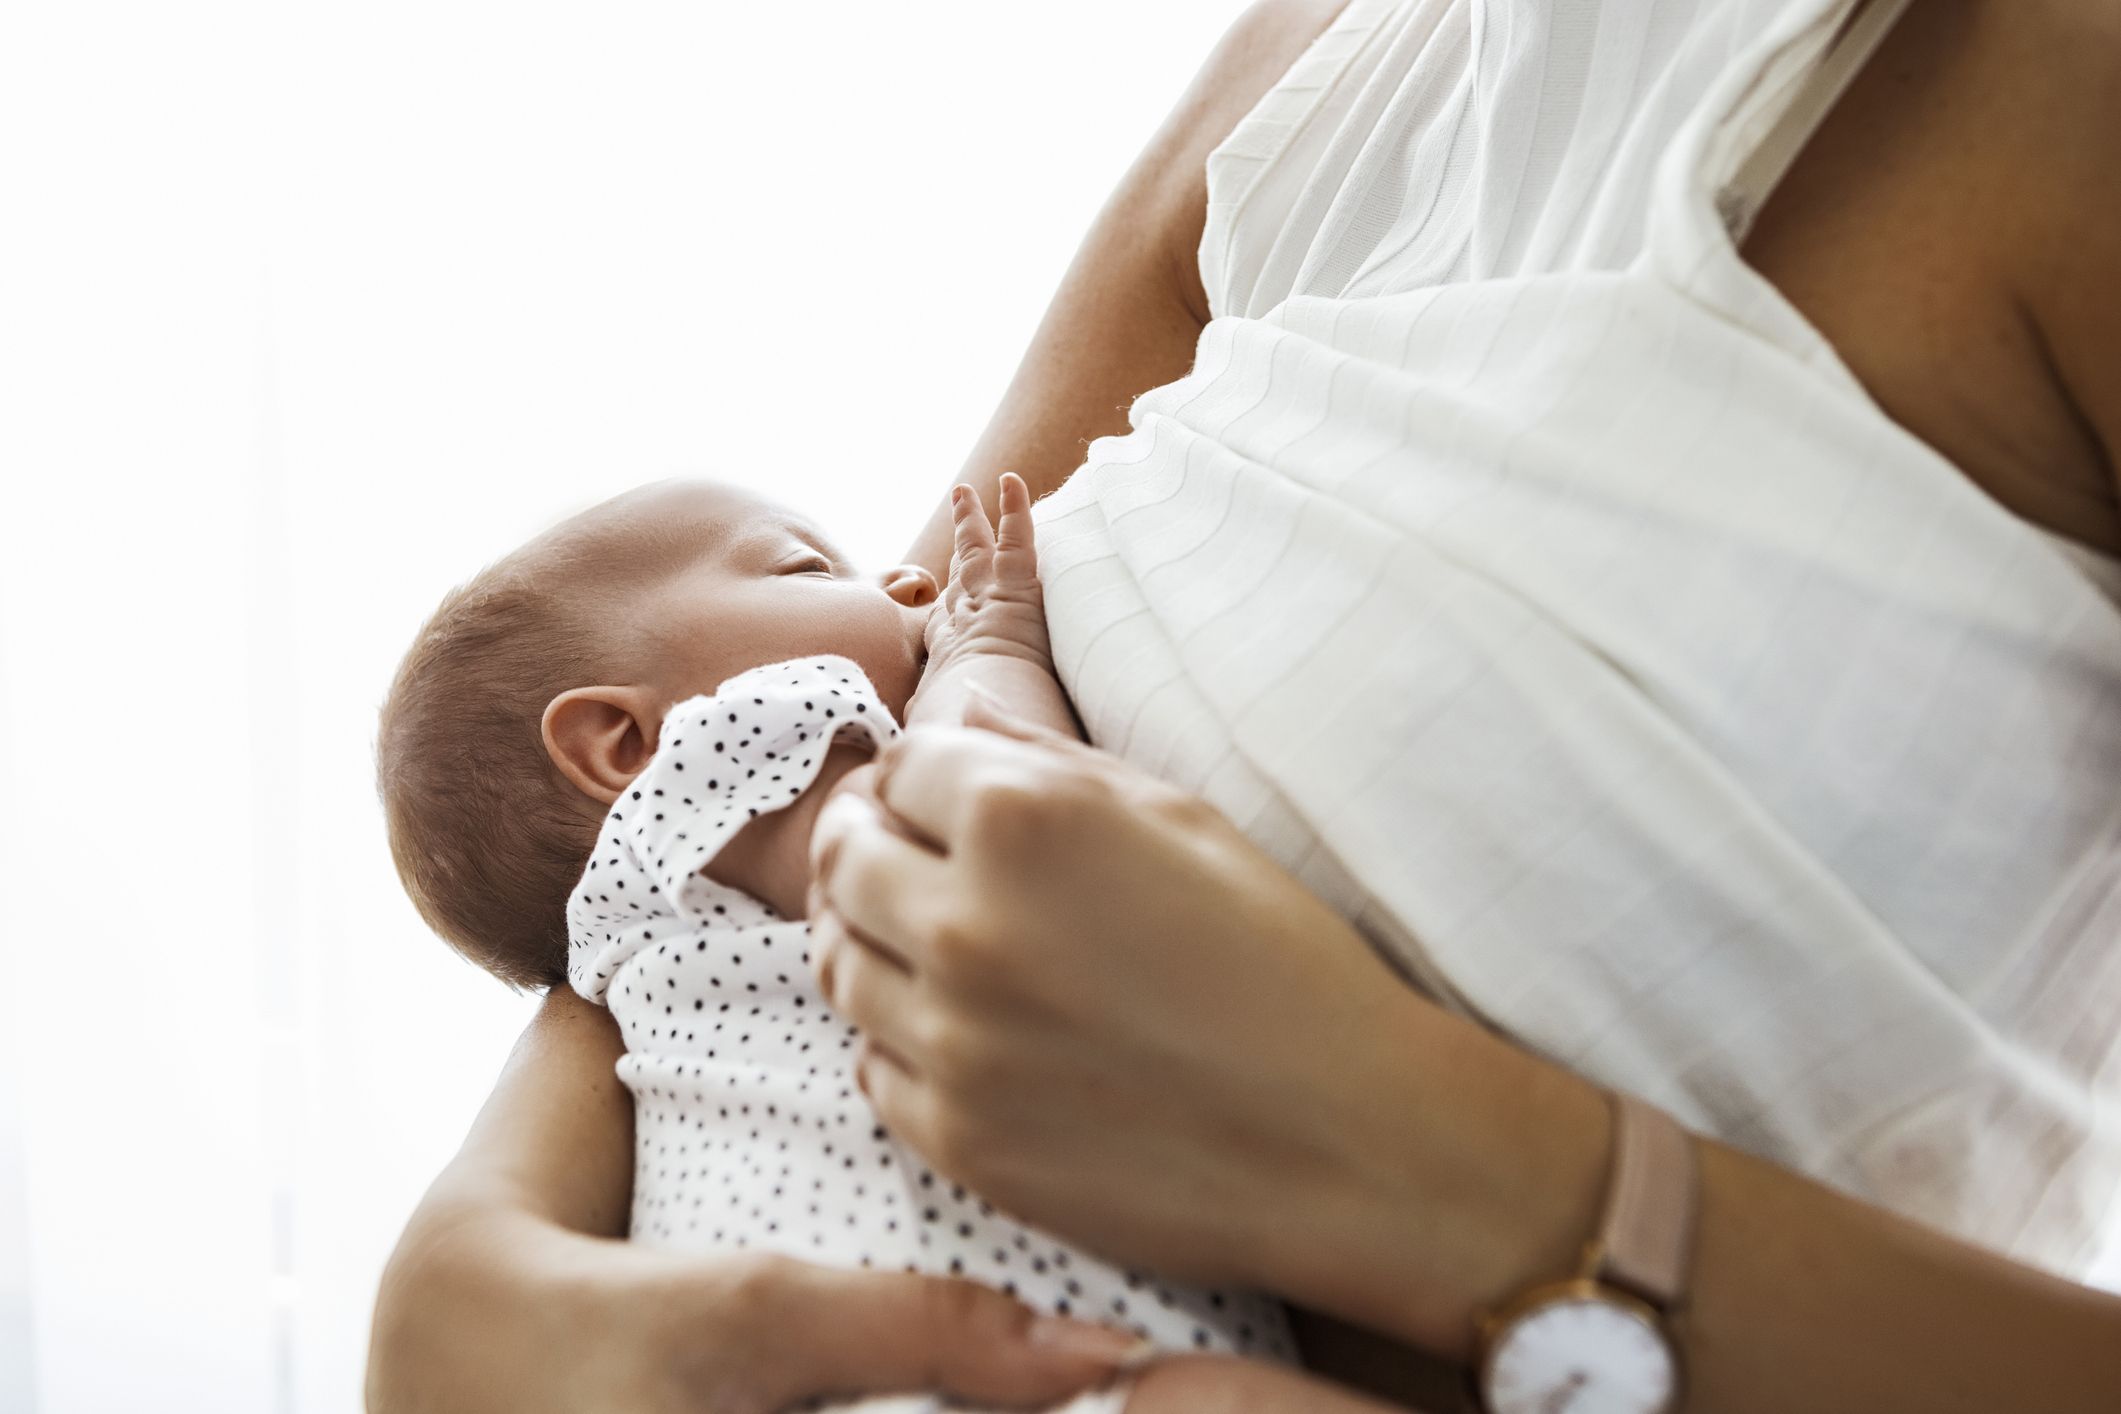 https://hips.hearstapps.com/hmg-prod.s3.amazonaws.com/images/breastfeeding-pain-1597886604.jpg